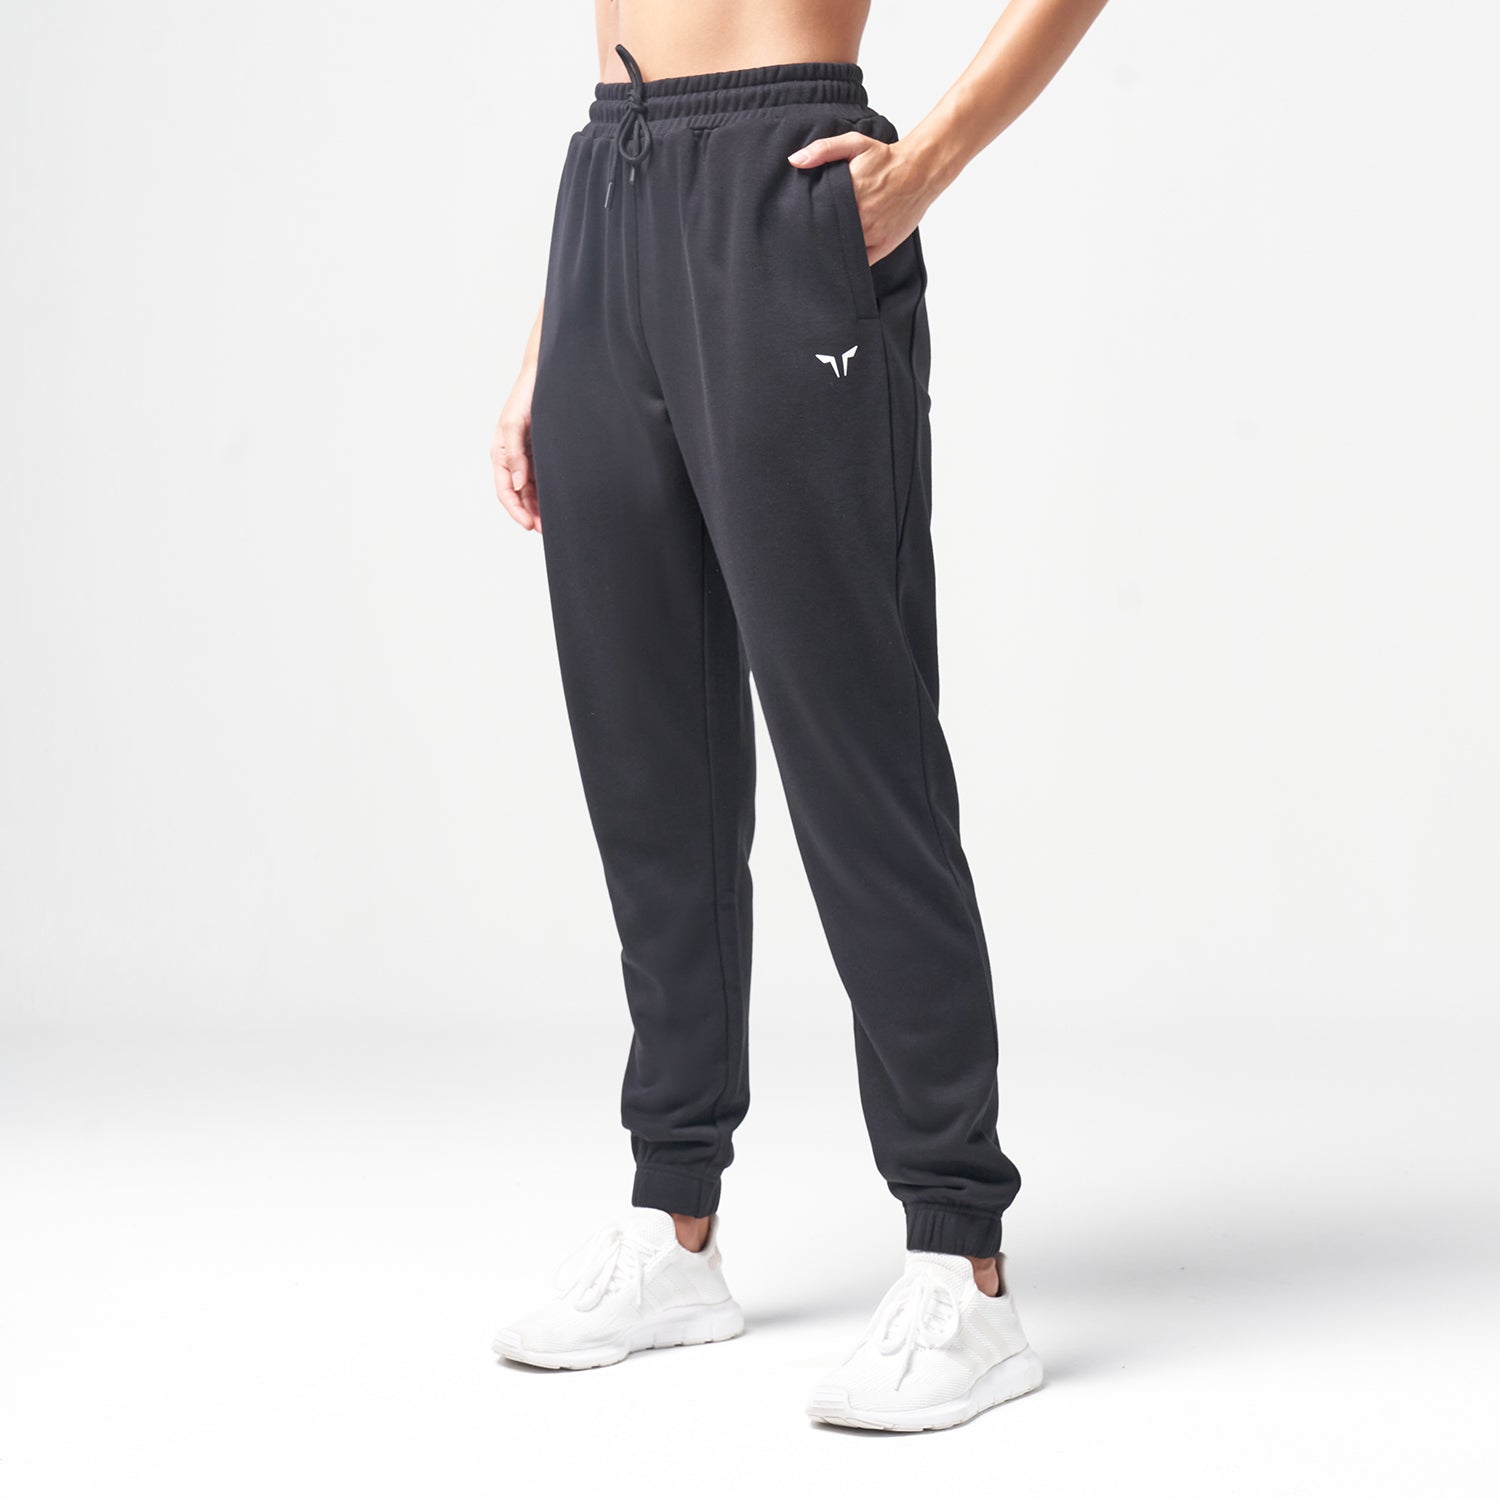 Essential Joggers - Black | Workout Pants Women | SQUATWOLF